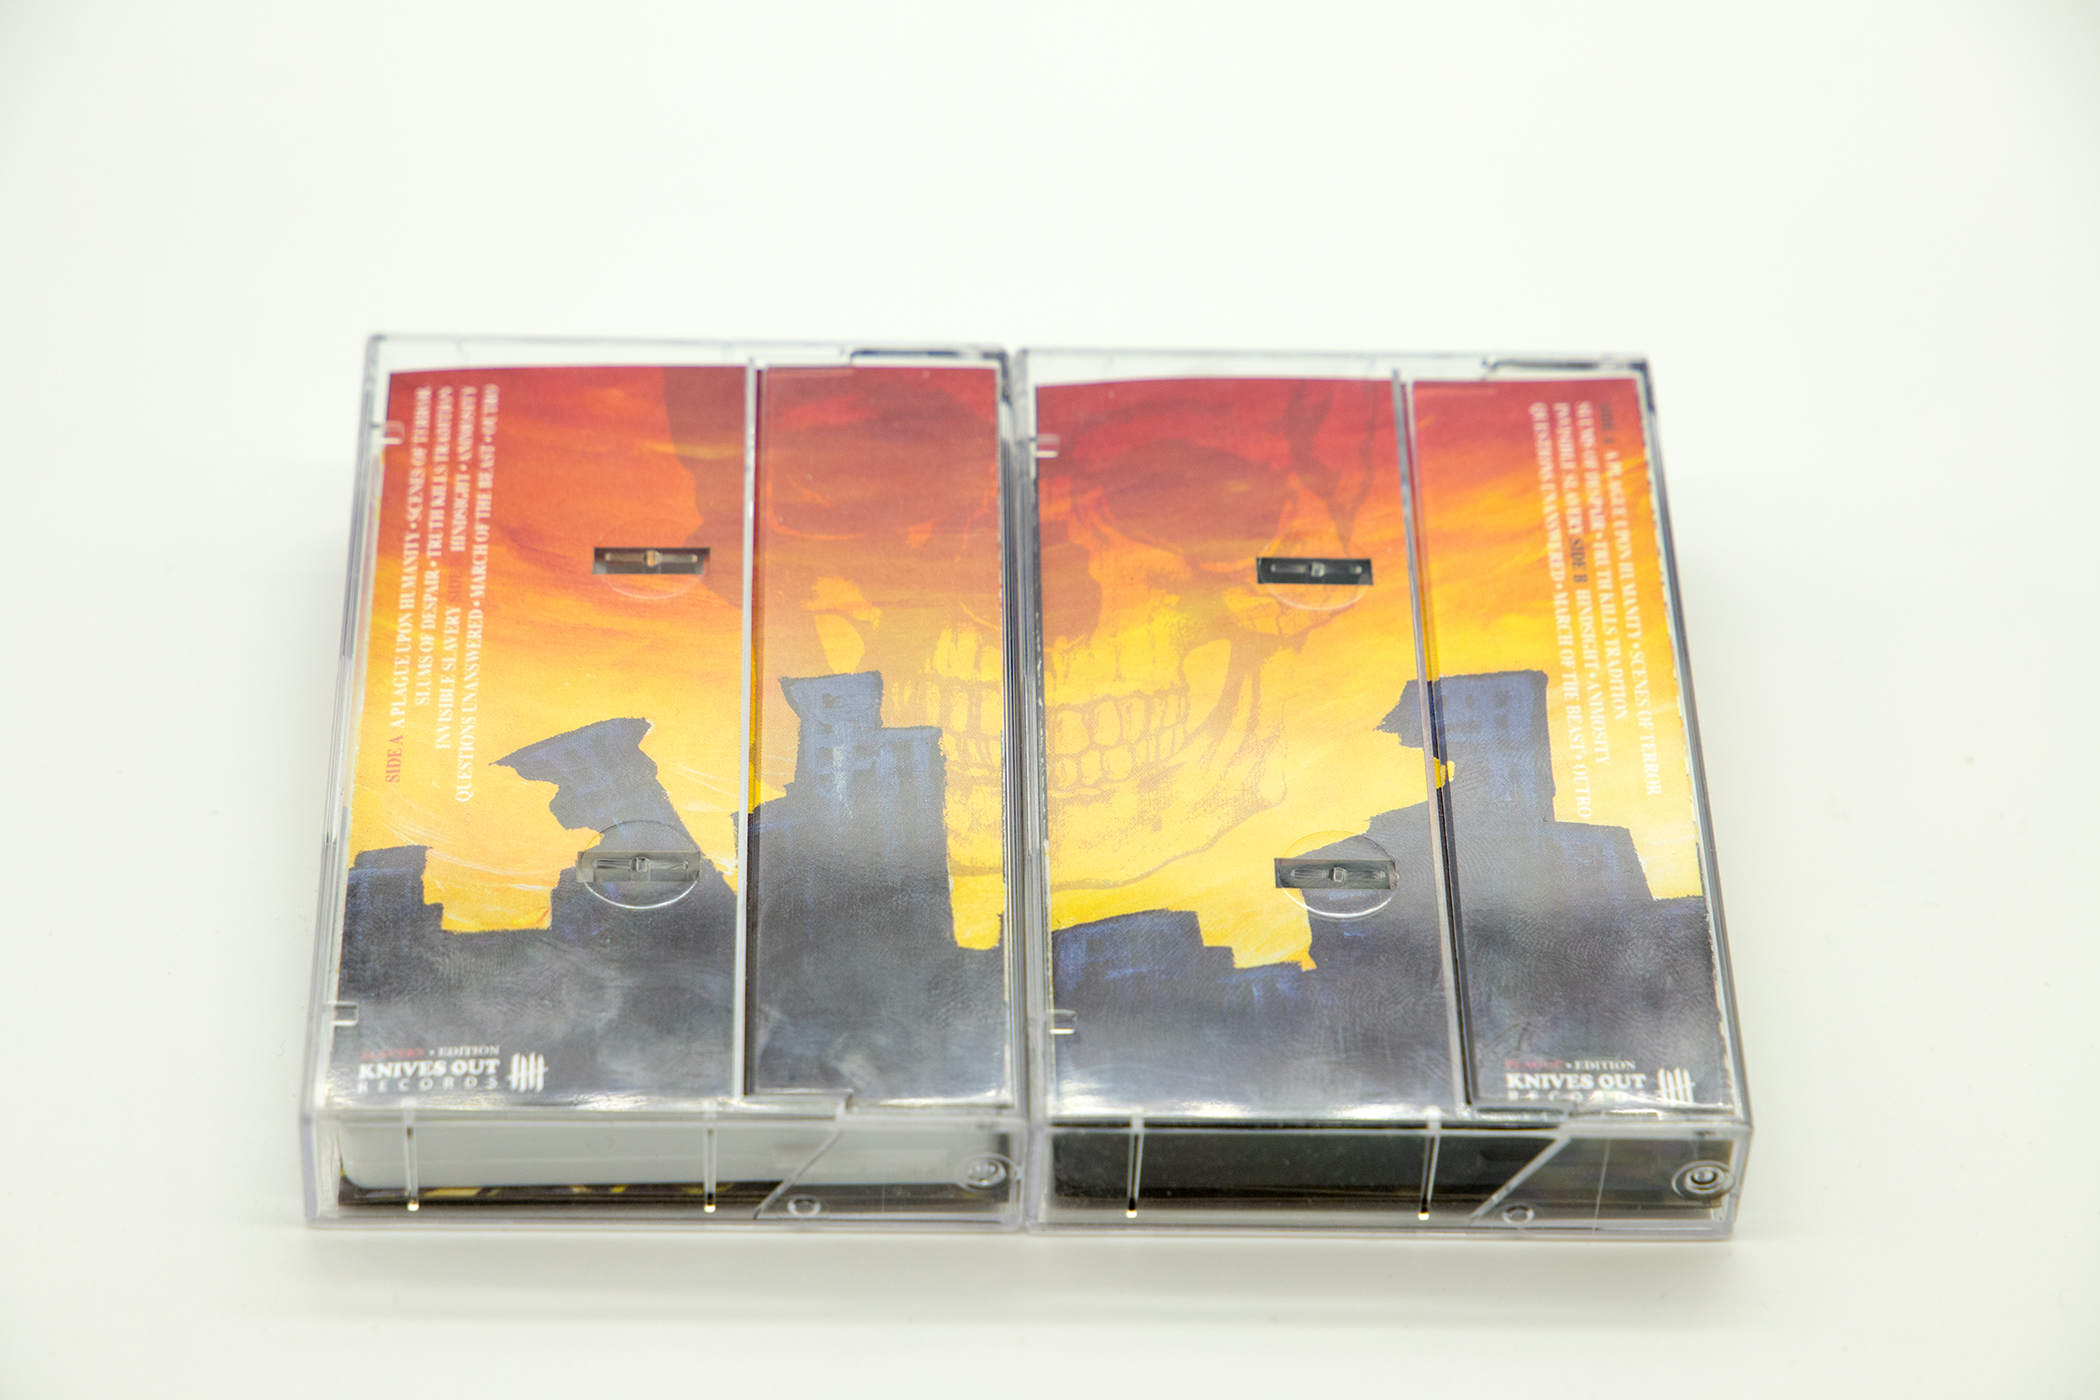 UNIT 731 "A Plague Upon Humanity" Etched Cassette Tape